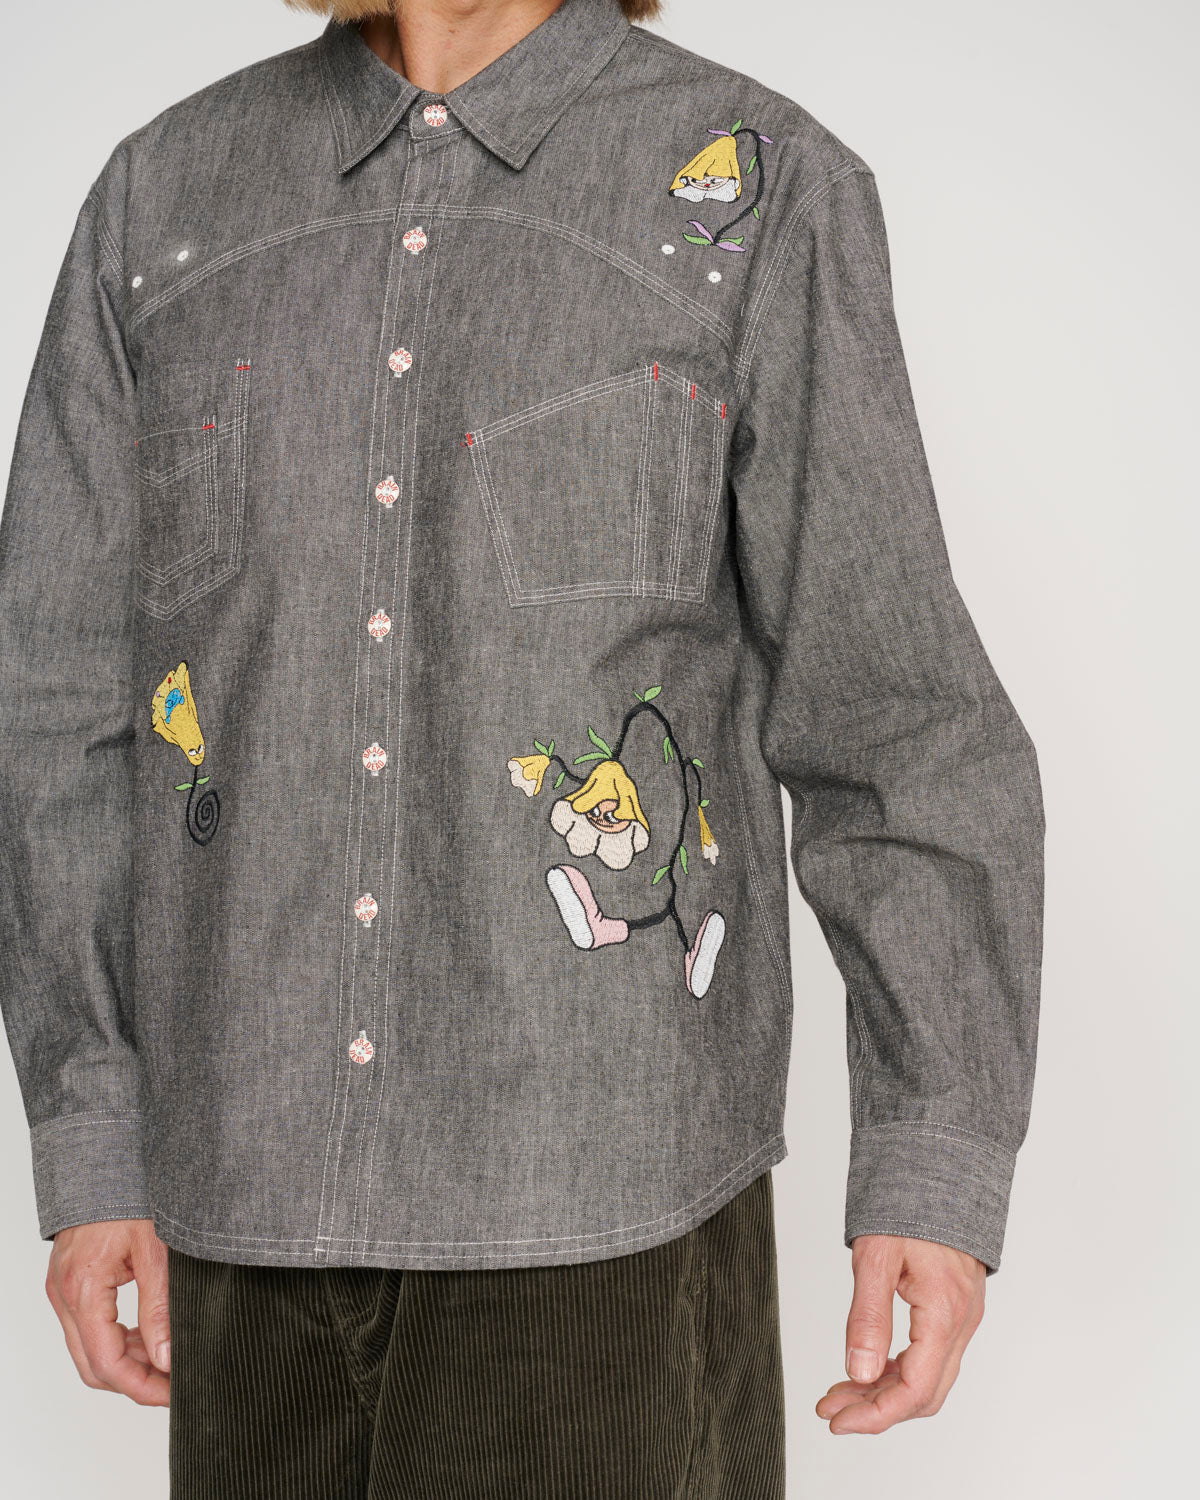 Garden Party Chambray Button Up Shirt - Gray 6